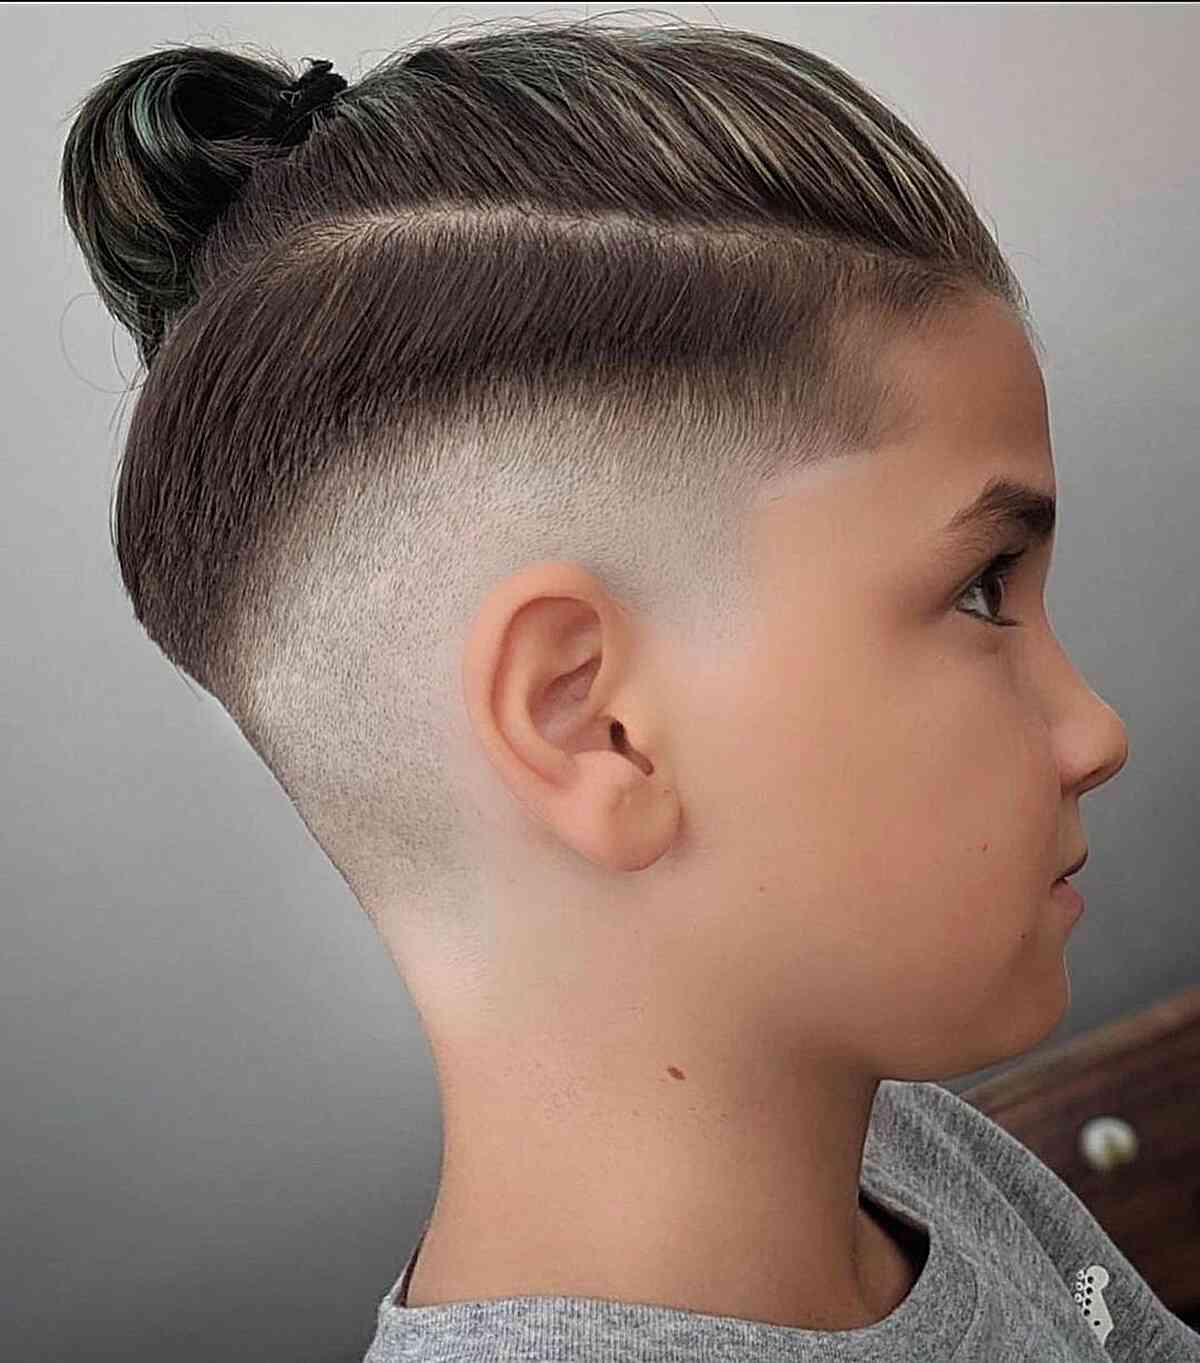 Boys haircut: picture of a boy rocking the man bun style